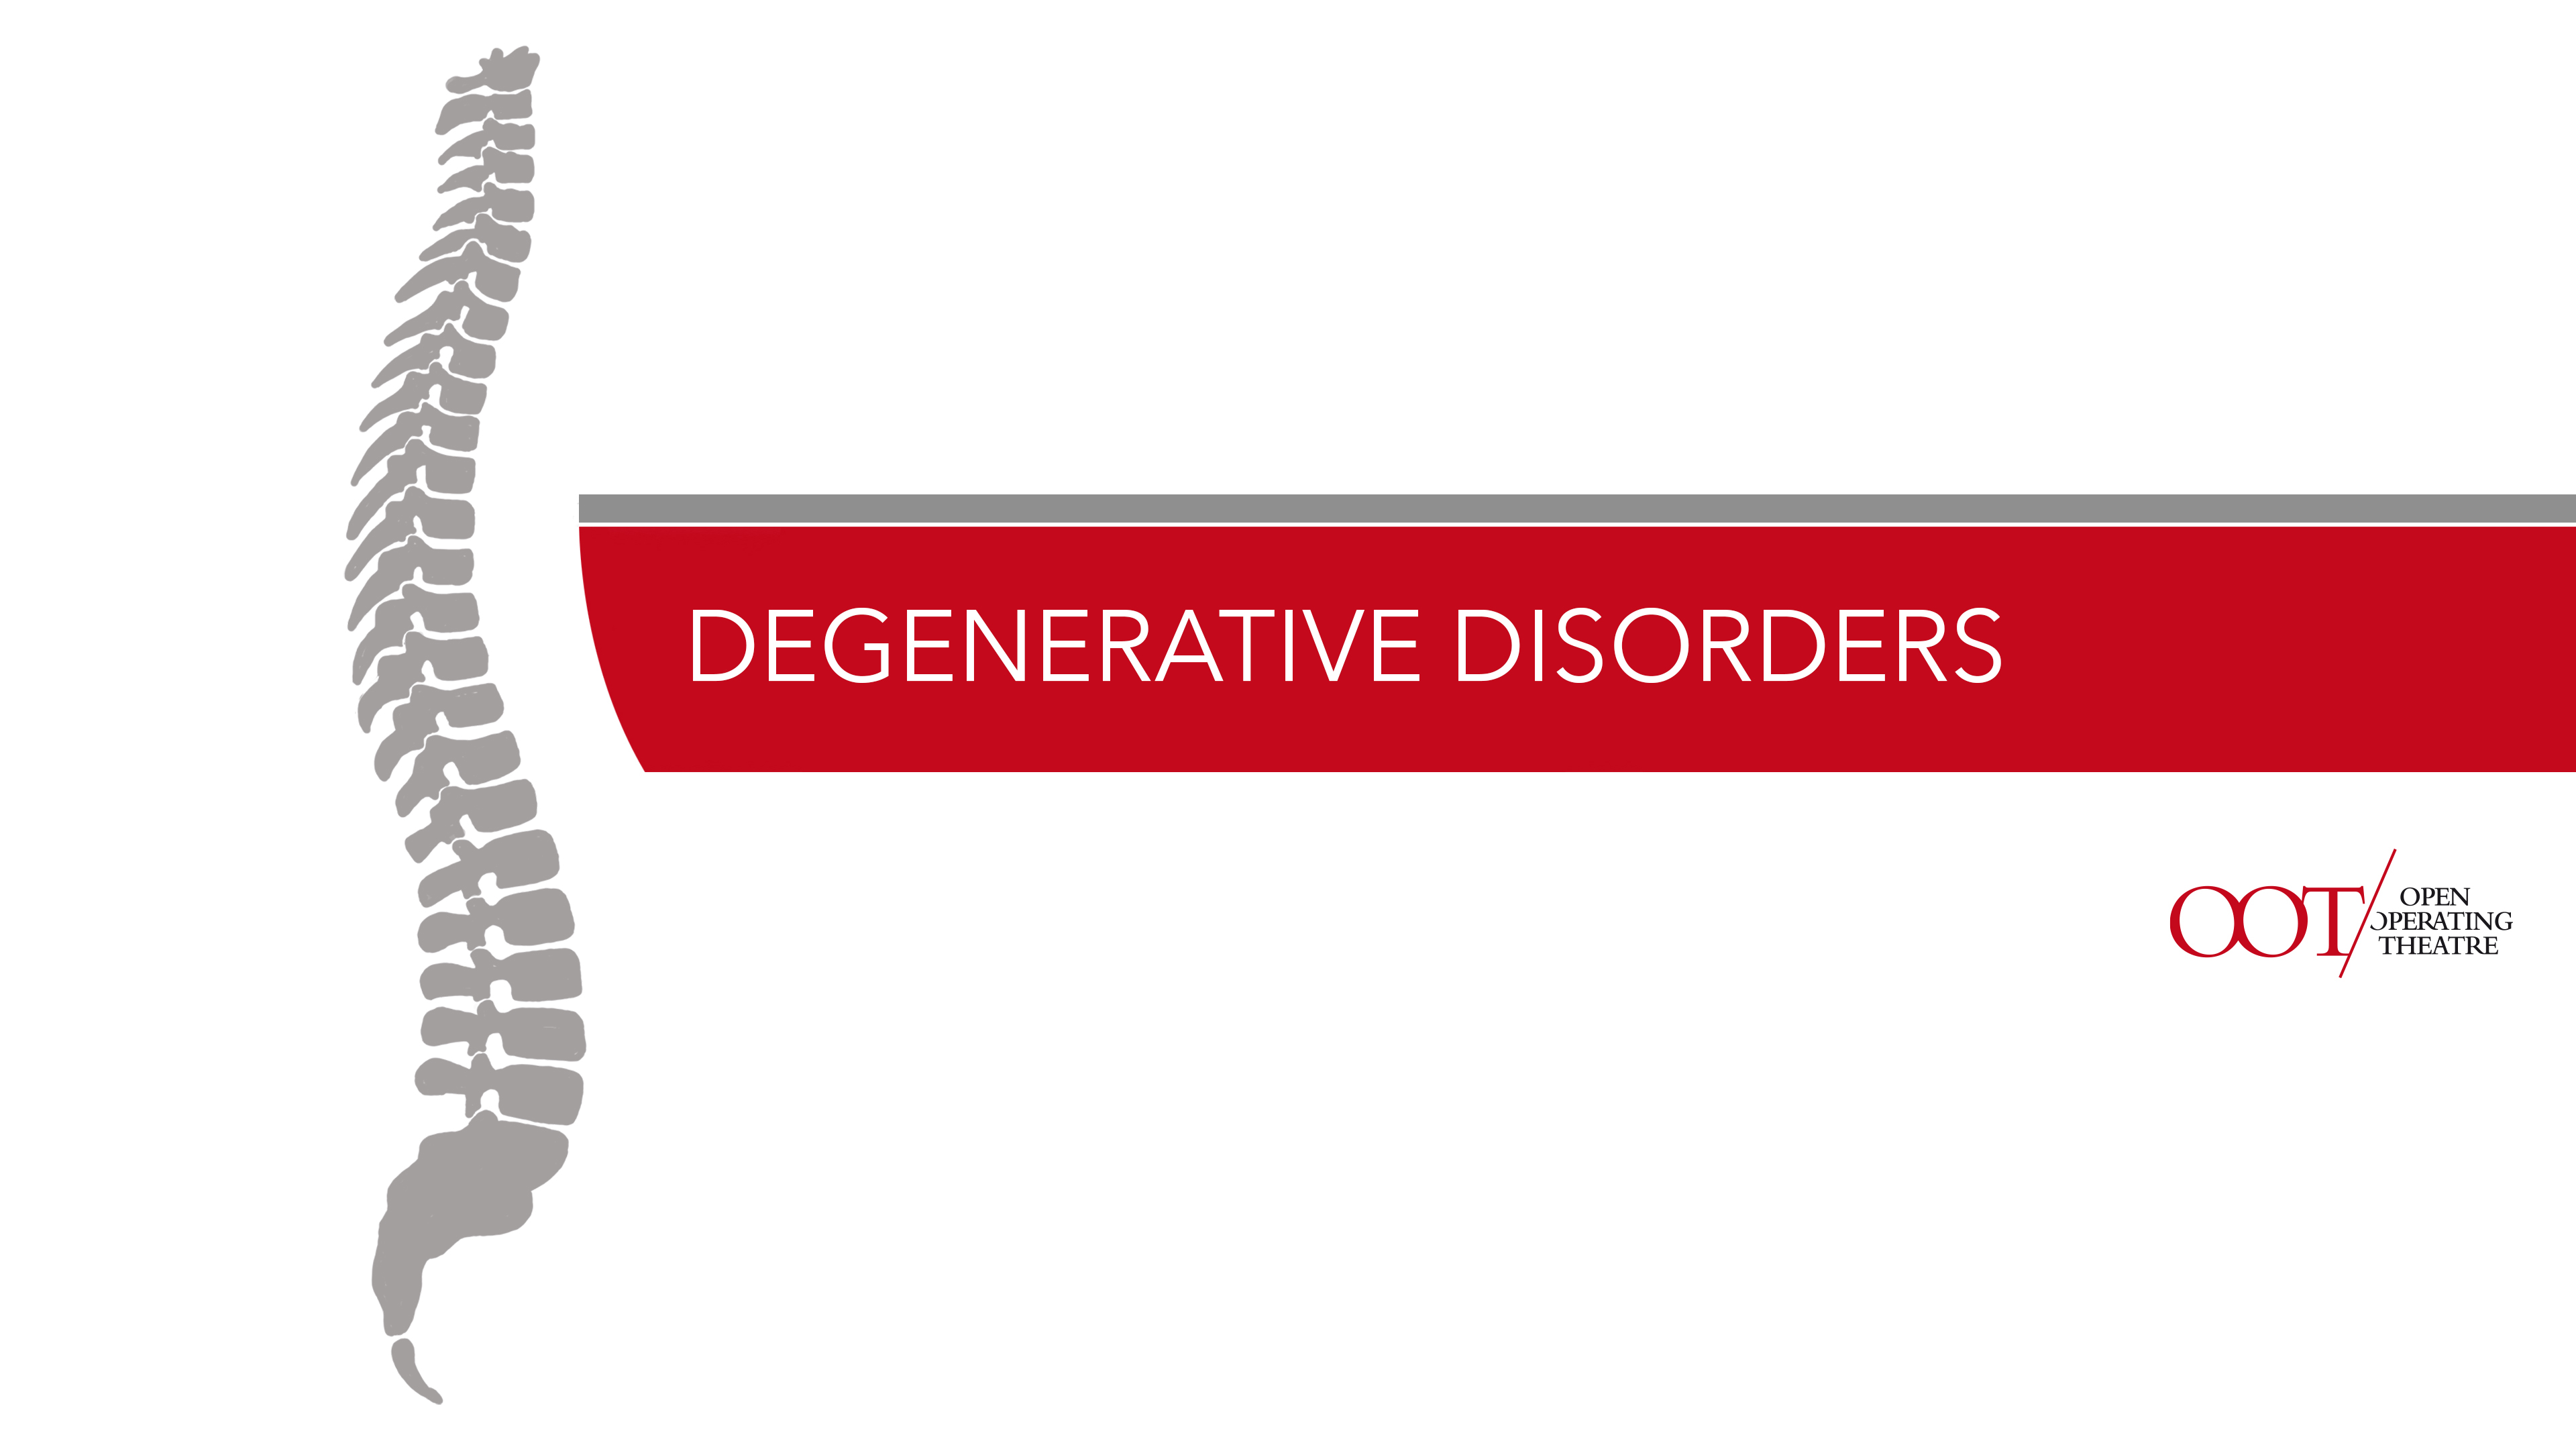 Degenerative disorders